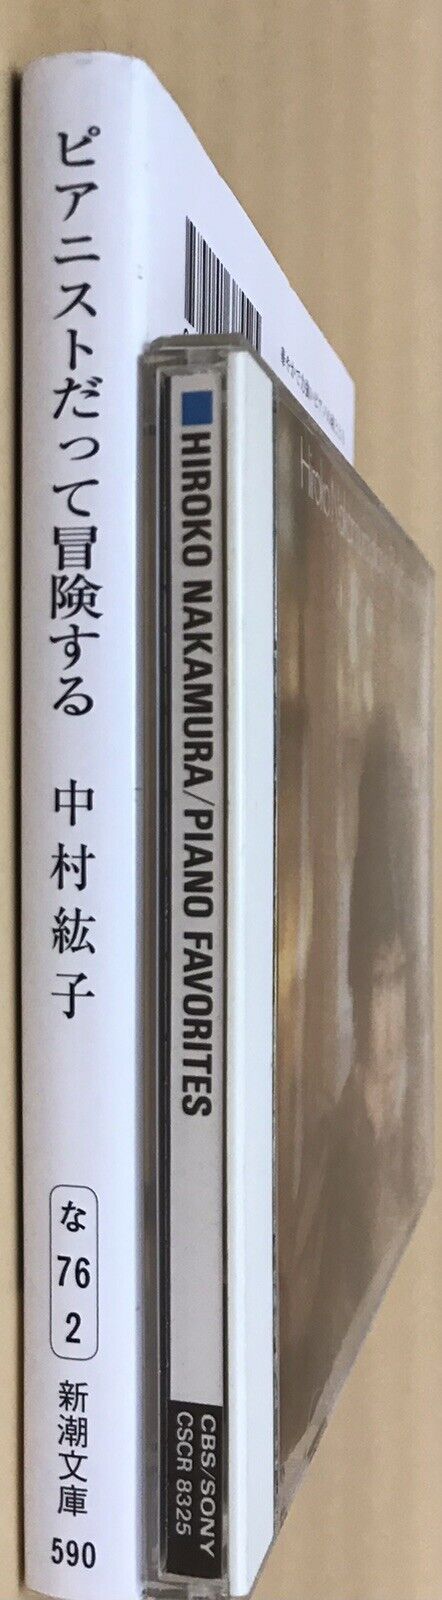 Hiroko Nakamura Pianist Book CD set Shipped from Japan 2-piece set eBay